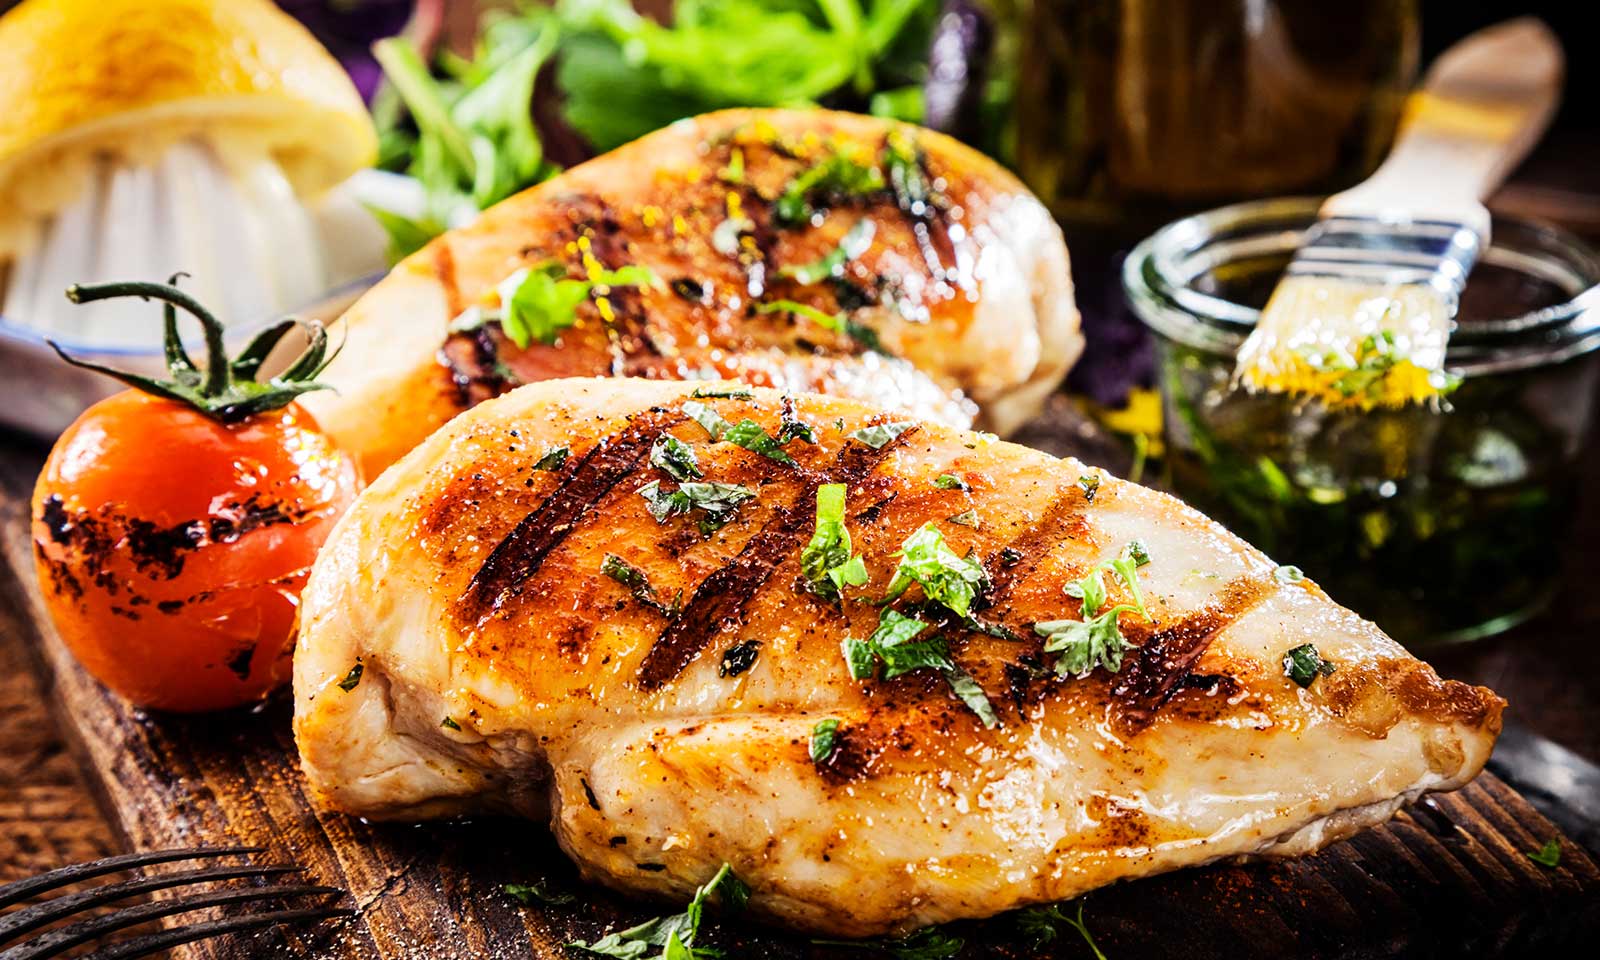 6 Simple Ways To Make Your Chicken Taste Great